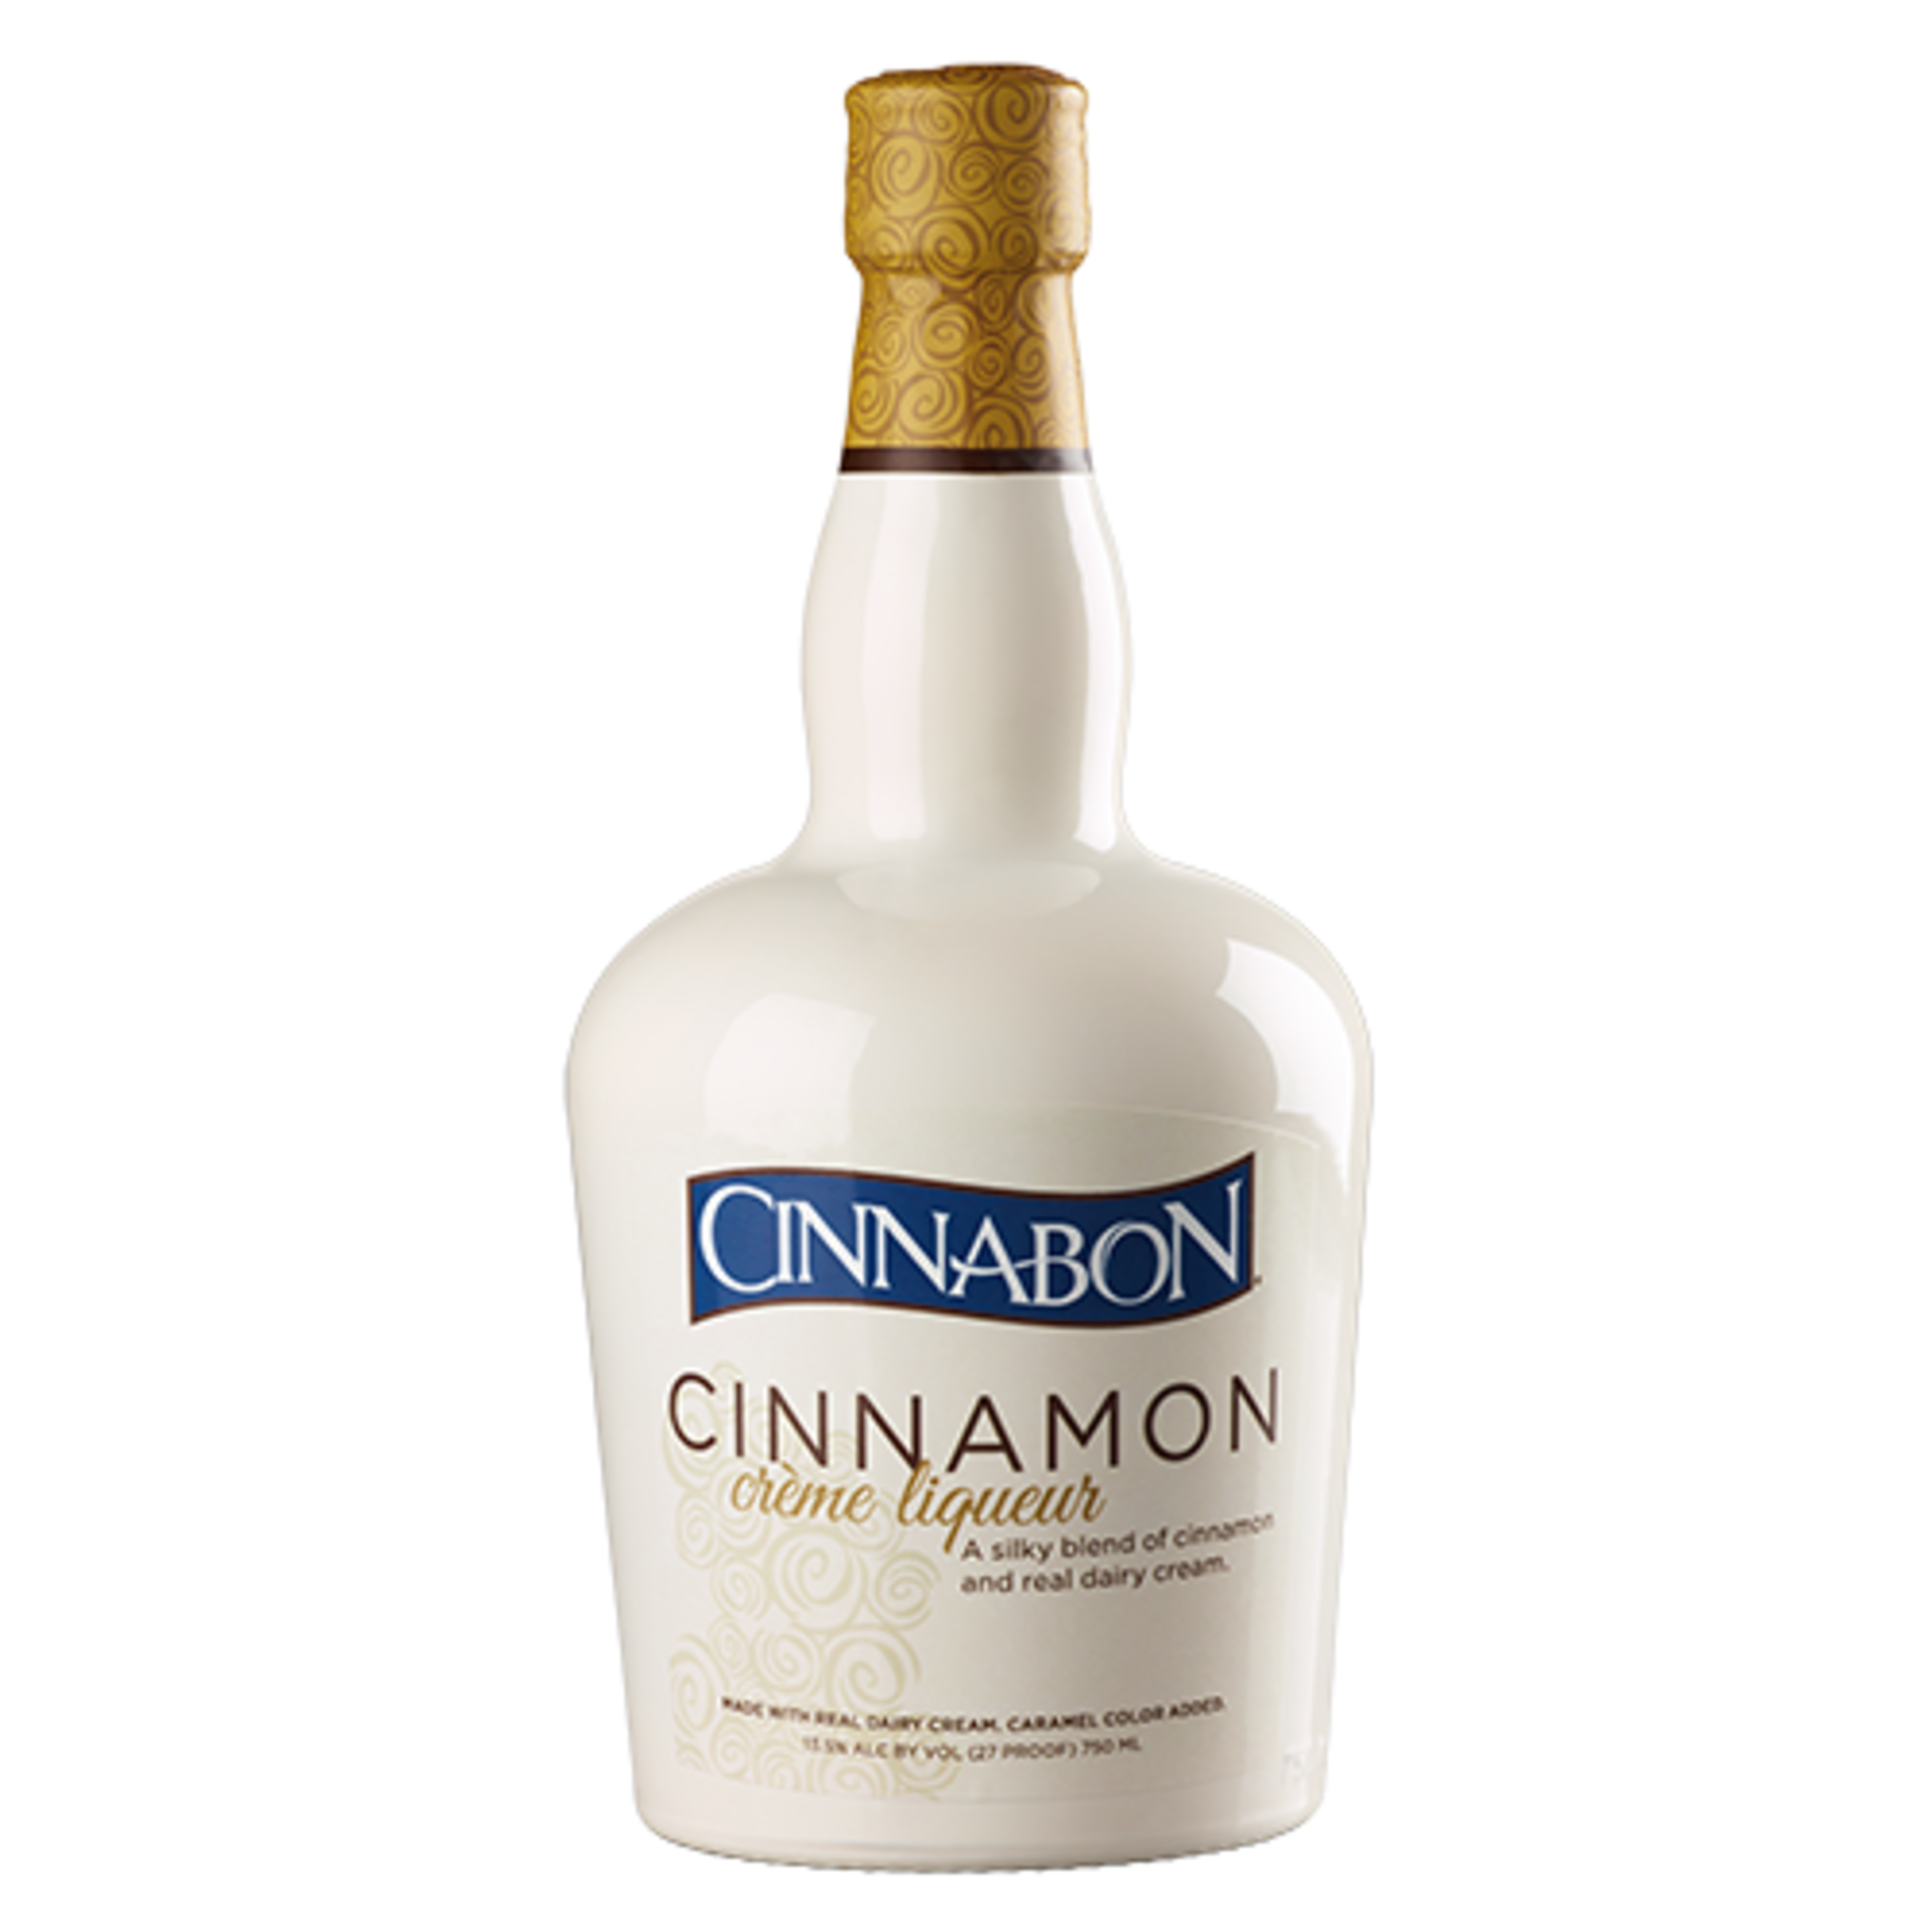 Cinnabon Cinnamon Creme Liqueur/Liquor - Liquor Geeks